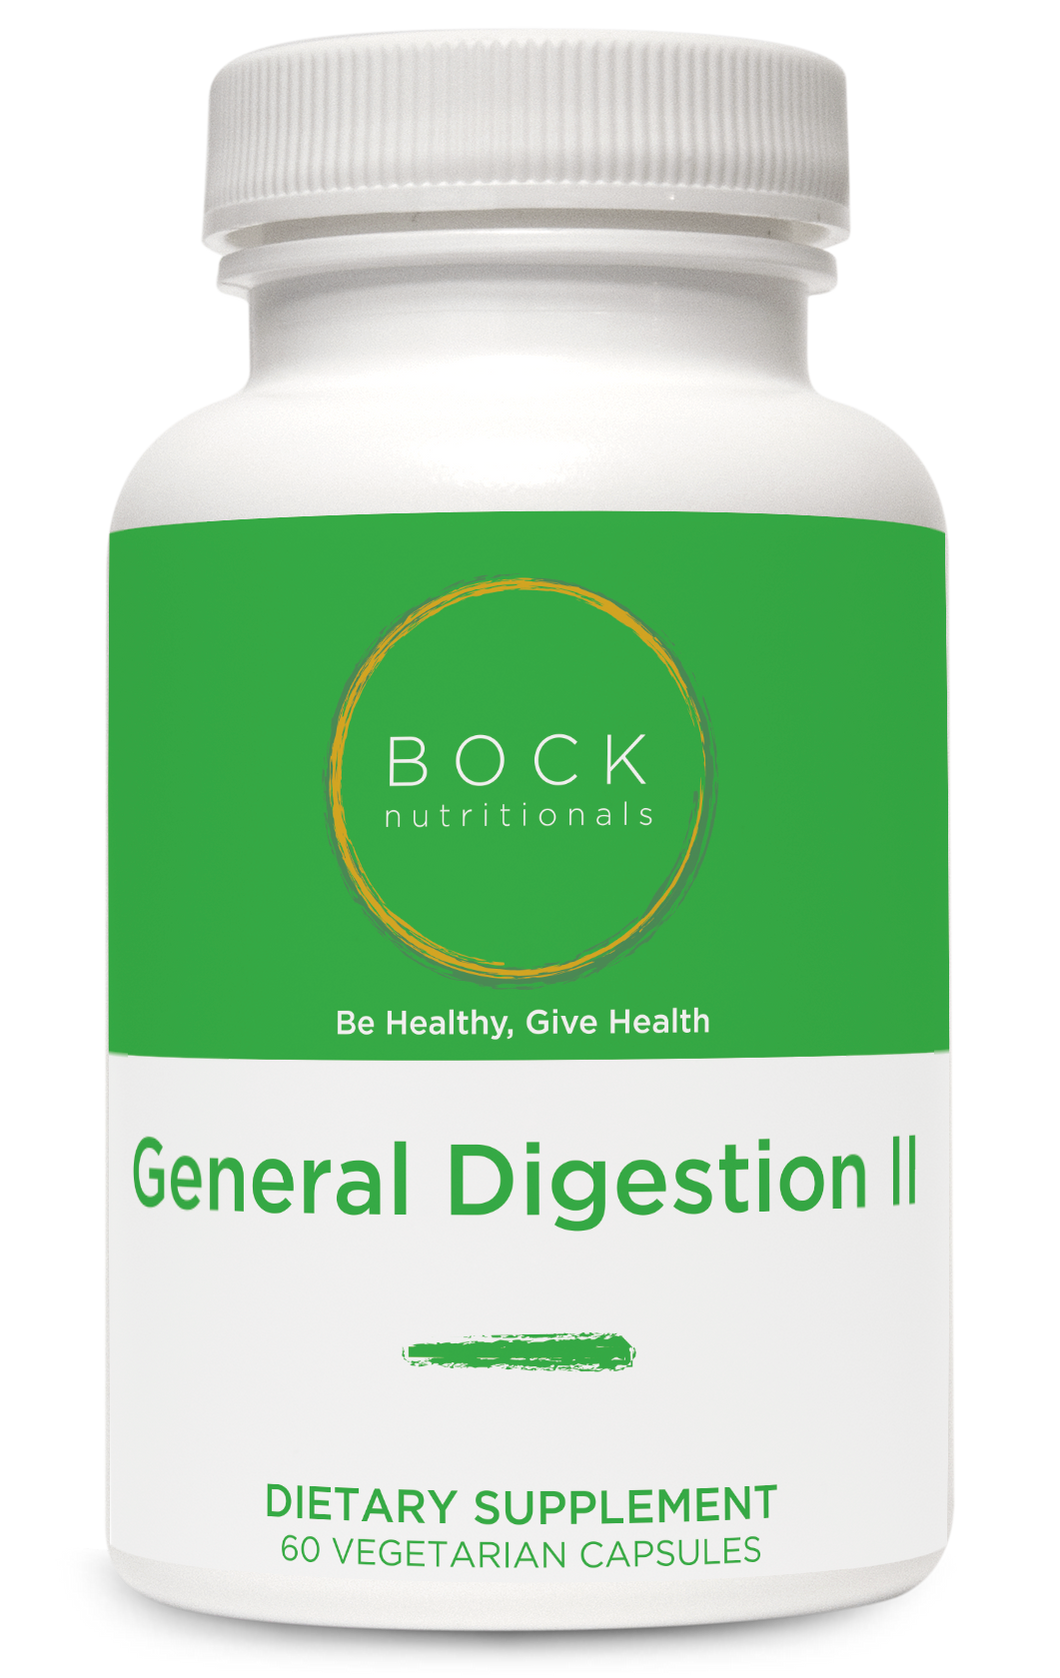 General Digestion II